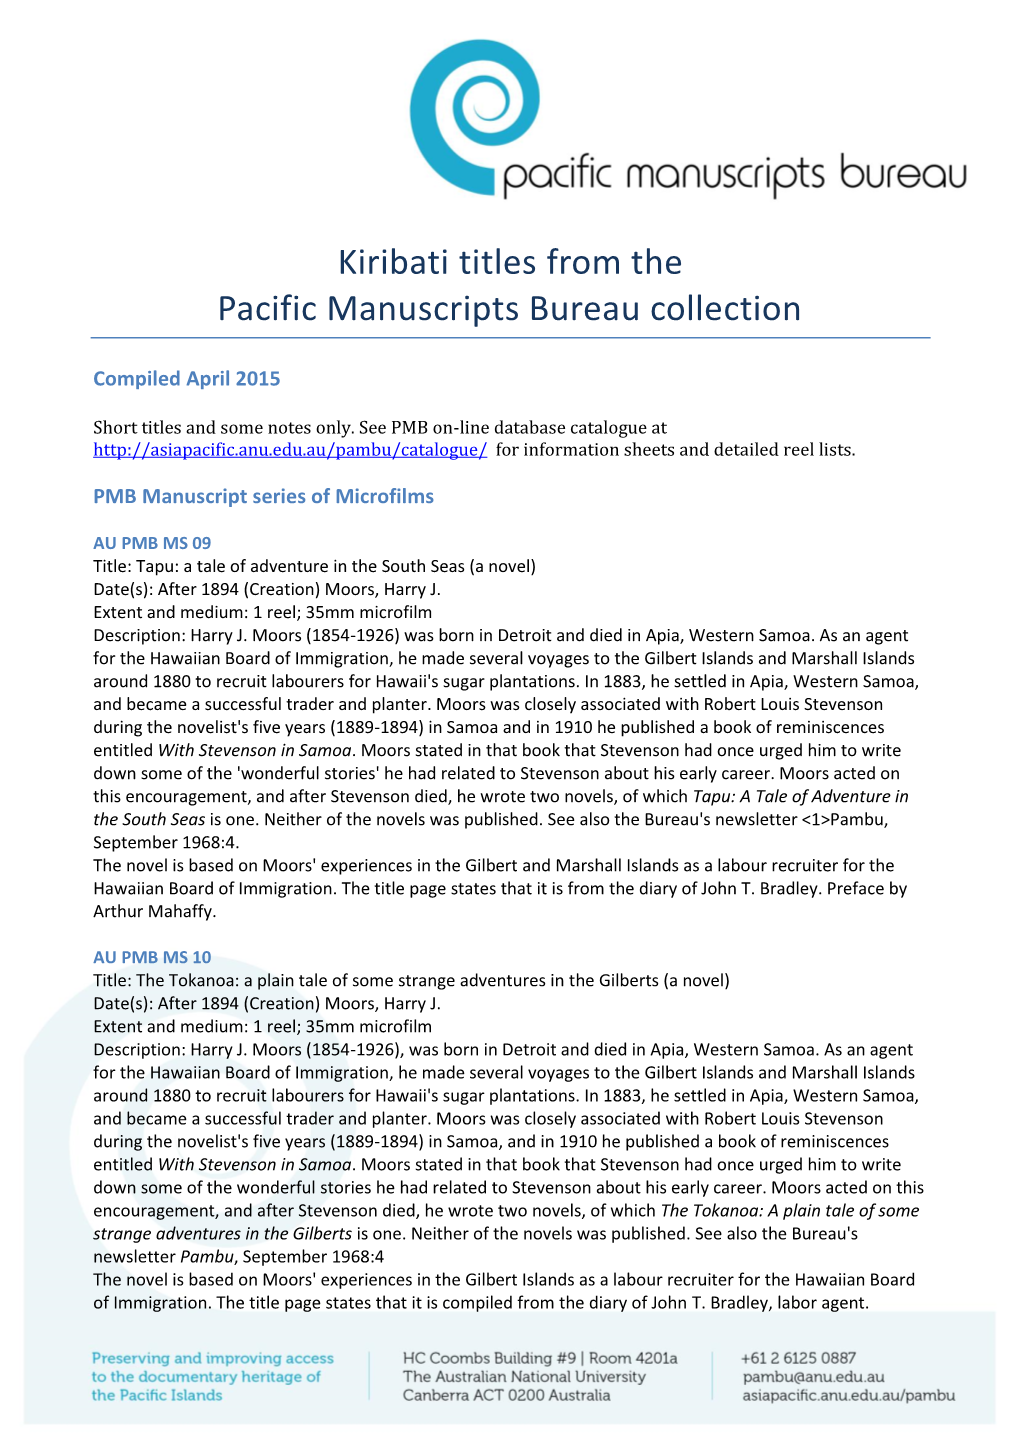 Kiribati Titles from the Pacific Manuscripts Bureau Collection